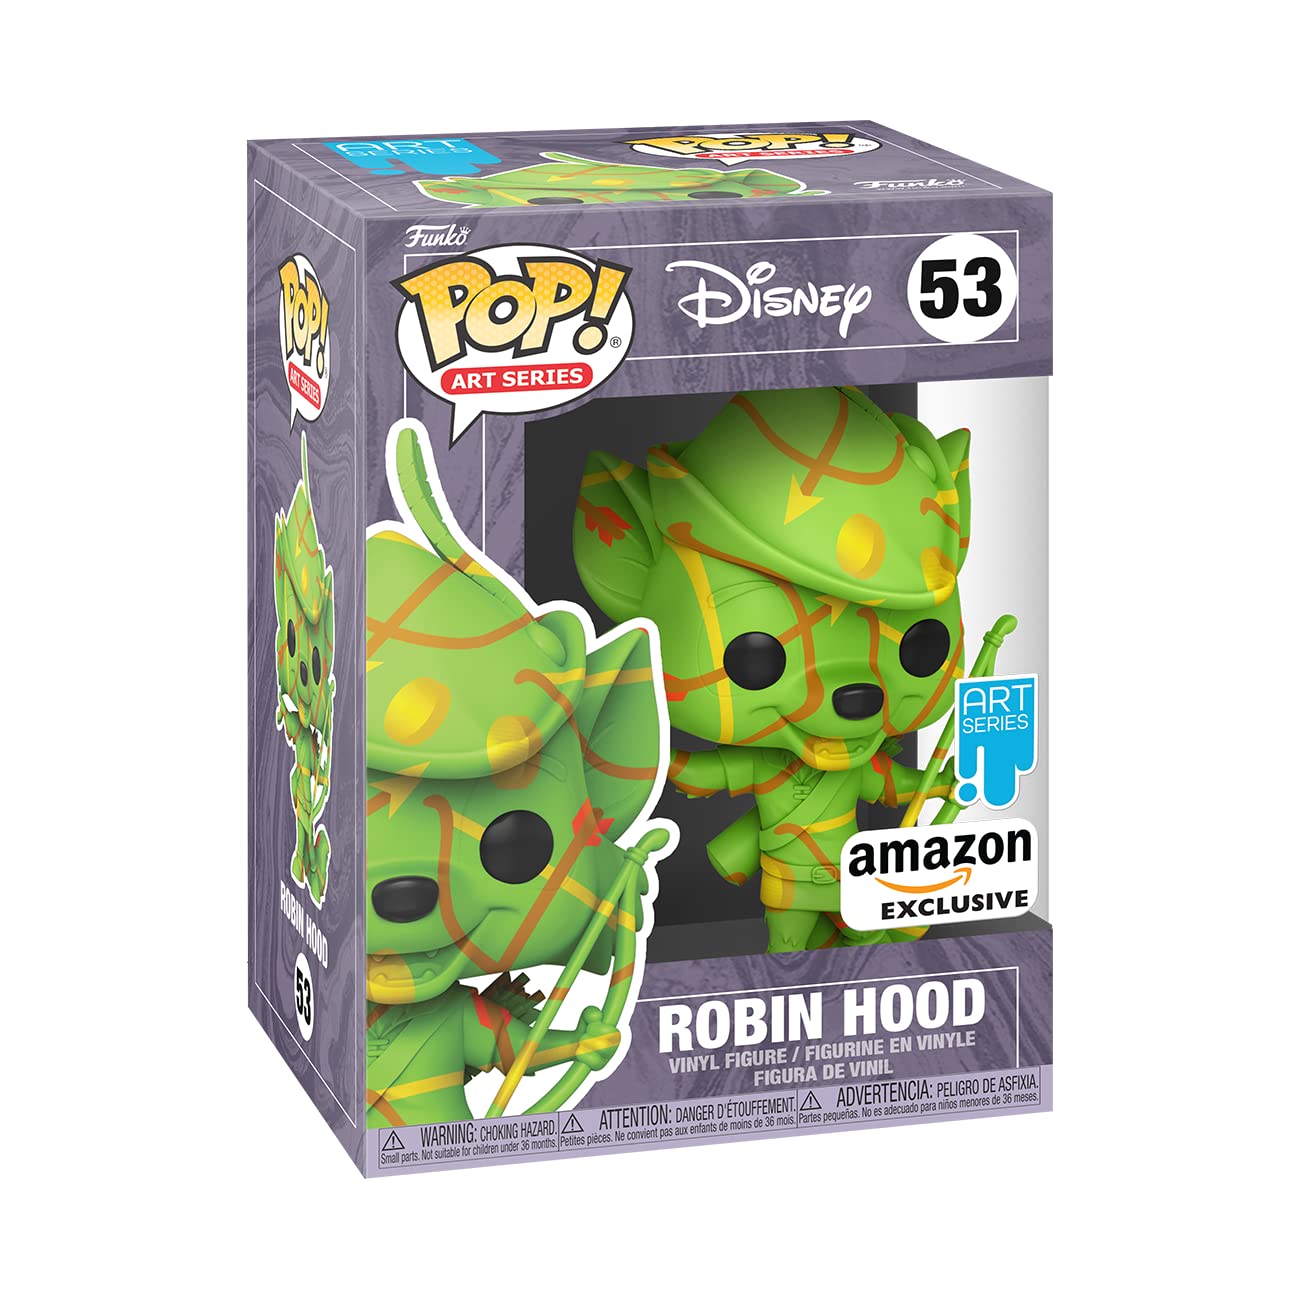 Funko Pop! Artist Series: Disney Treasures of The Vault - Robin Hood